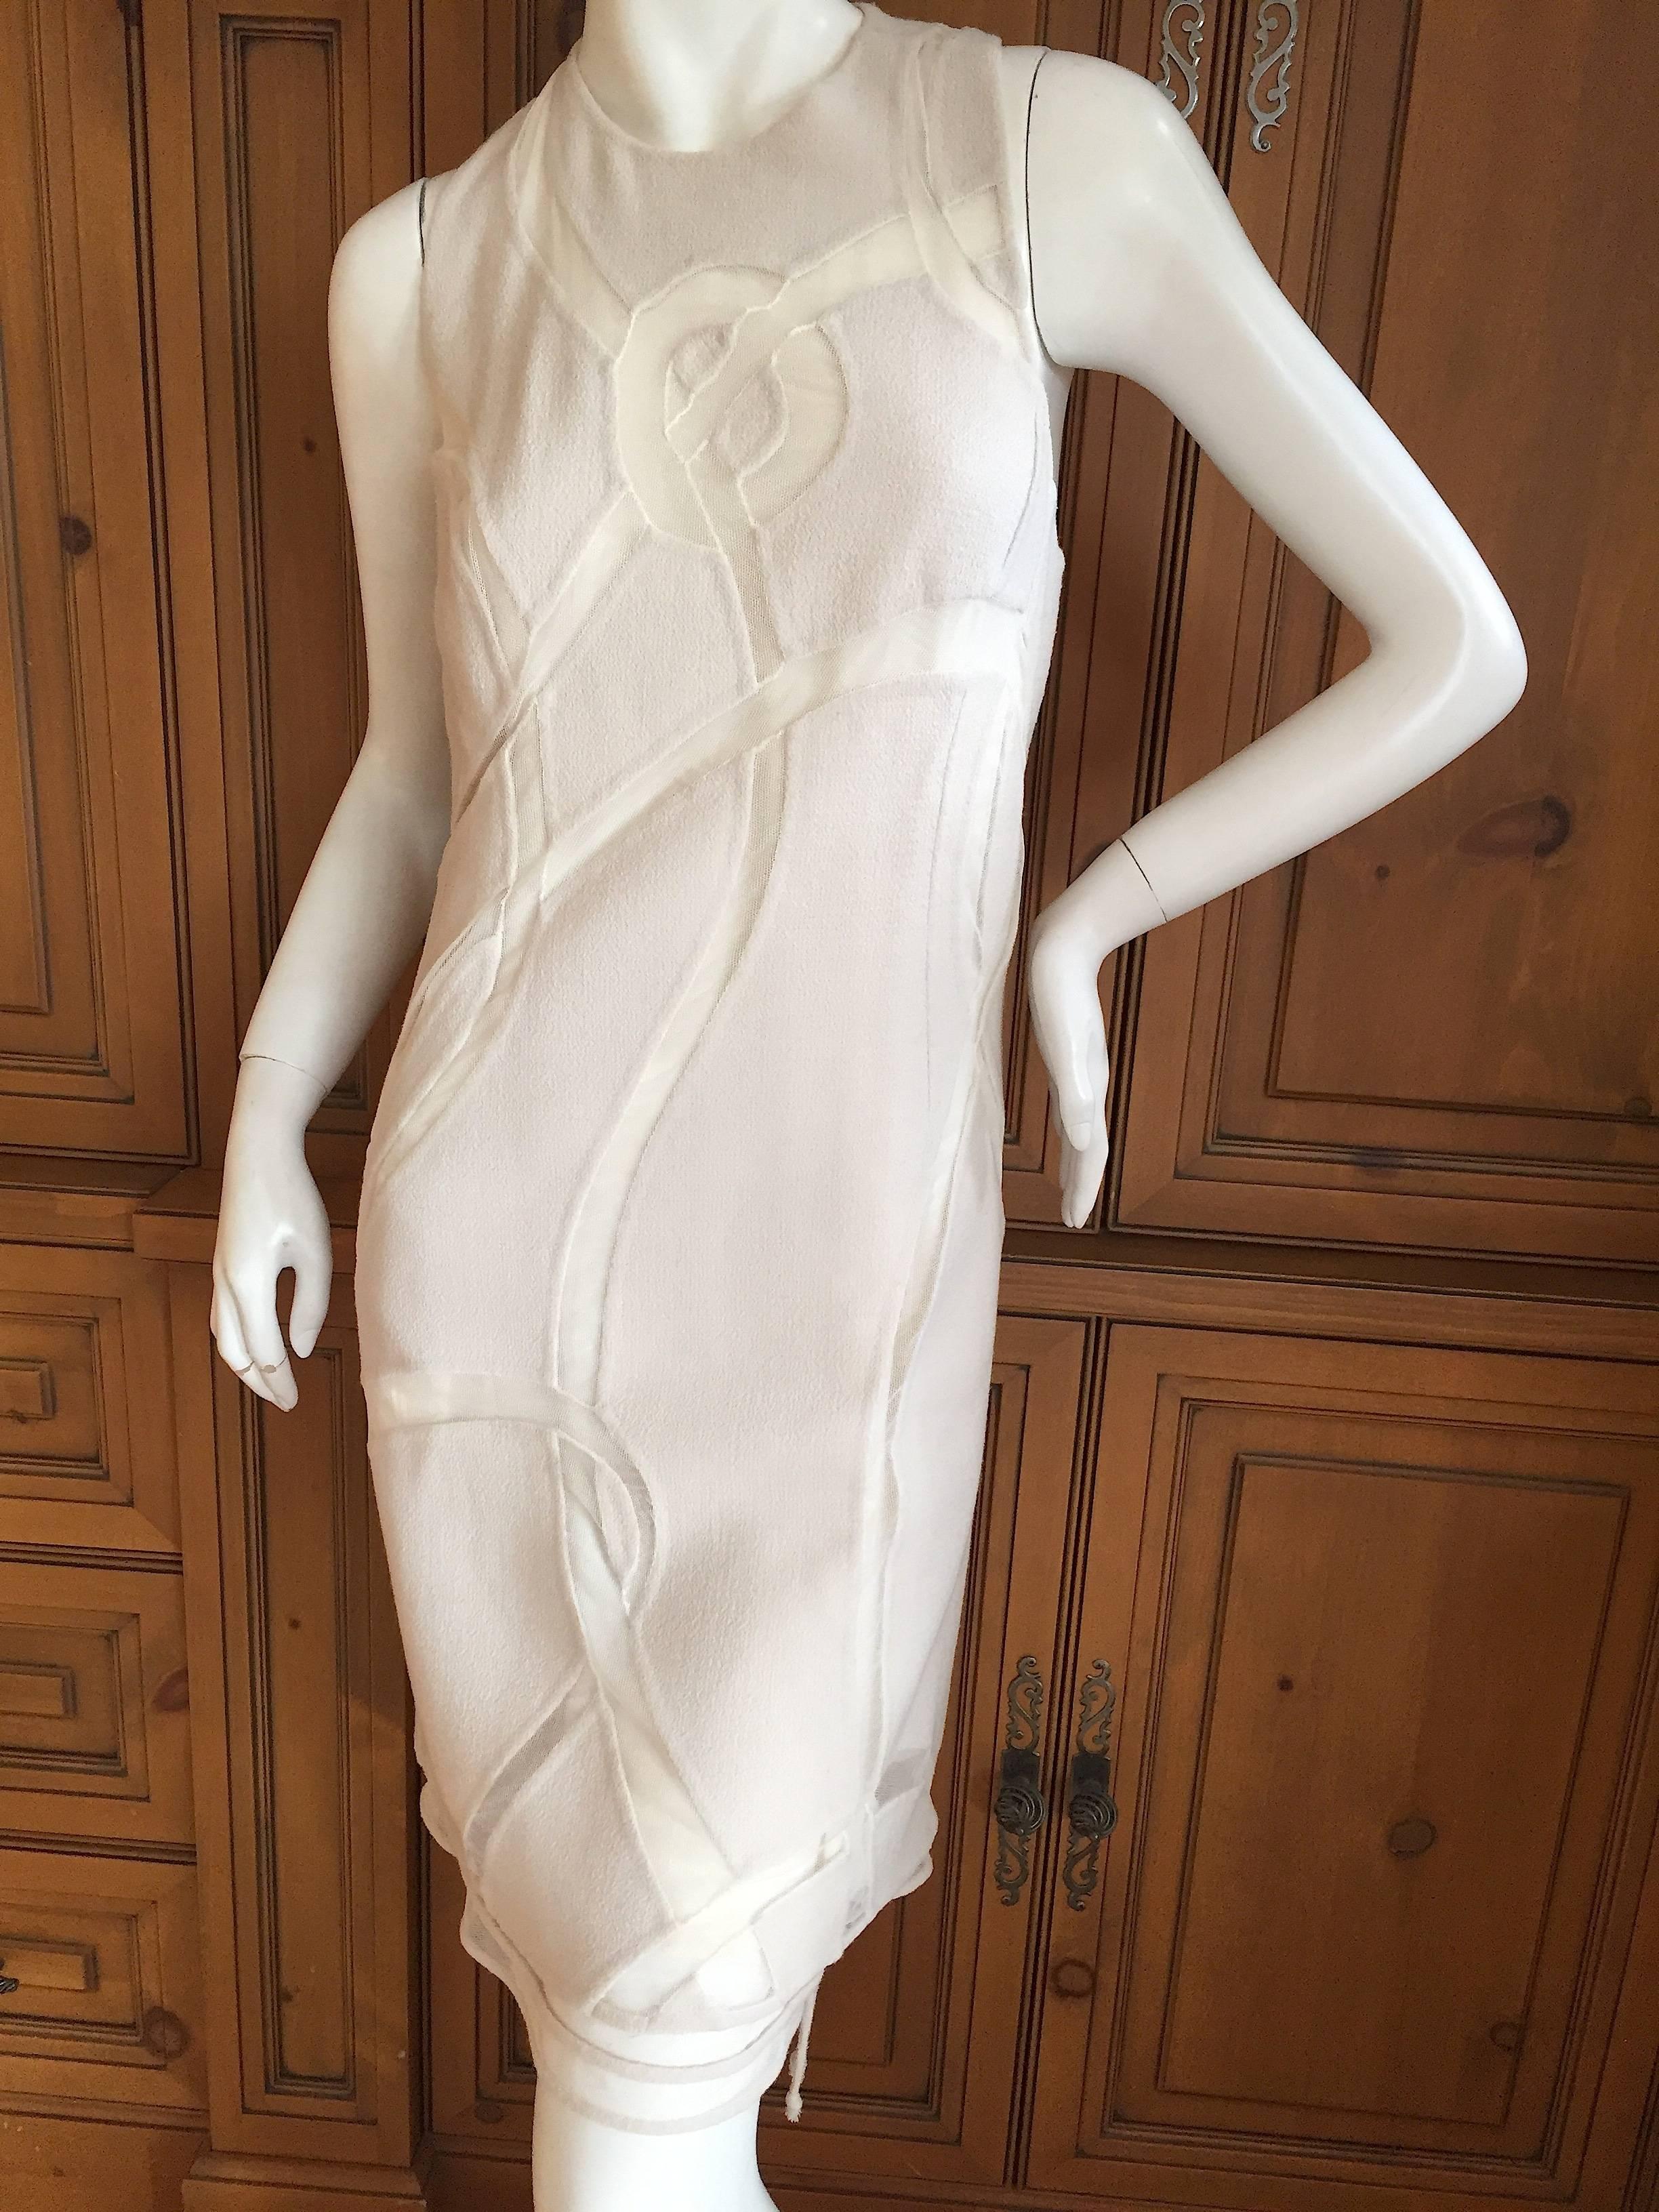 Ralph Rucci Ivory Sleeveless Dress with Mesh Inserts.
 Size 4